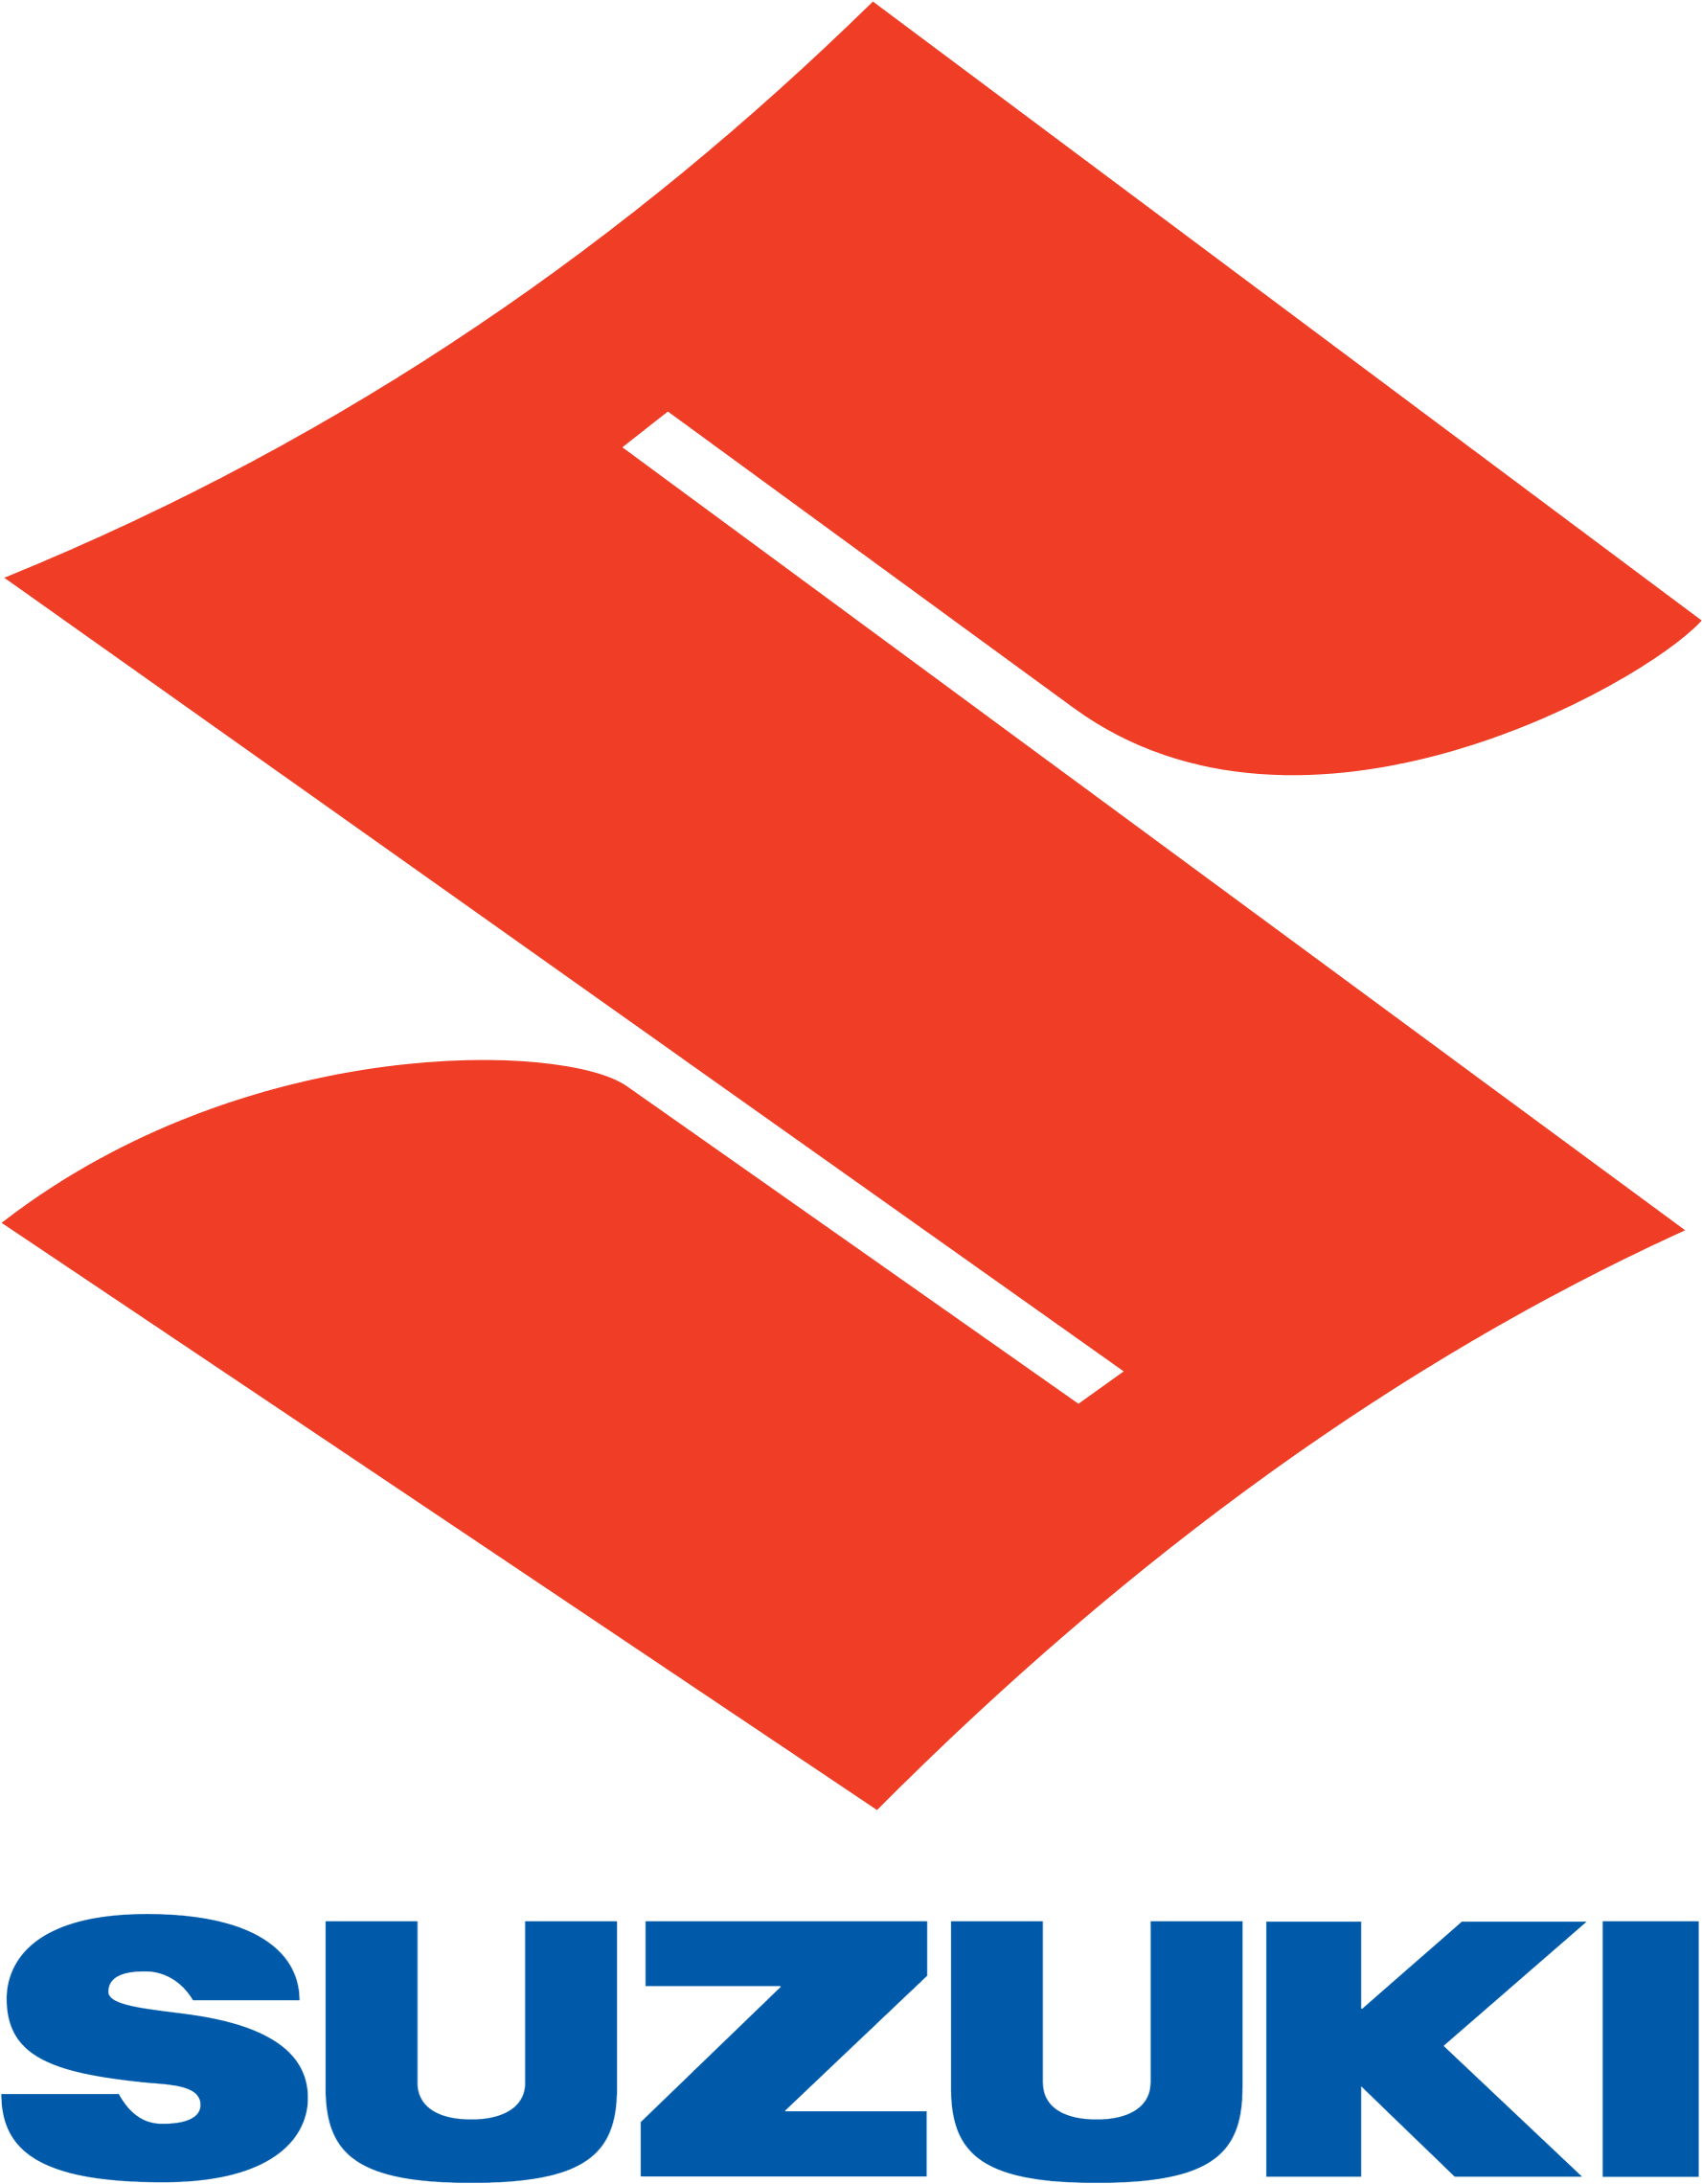 Download Logo Suzuki PNG Image High Quality HQ PNG Image | FreePNGImg